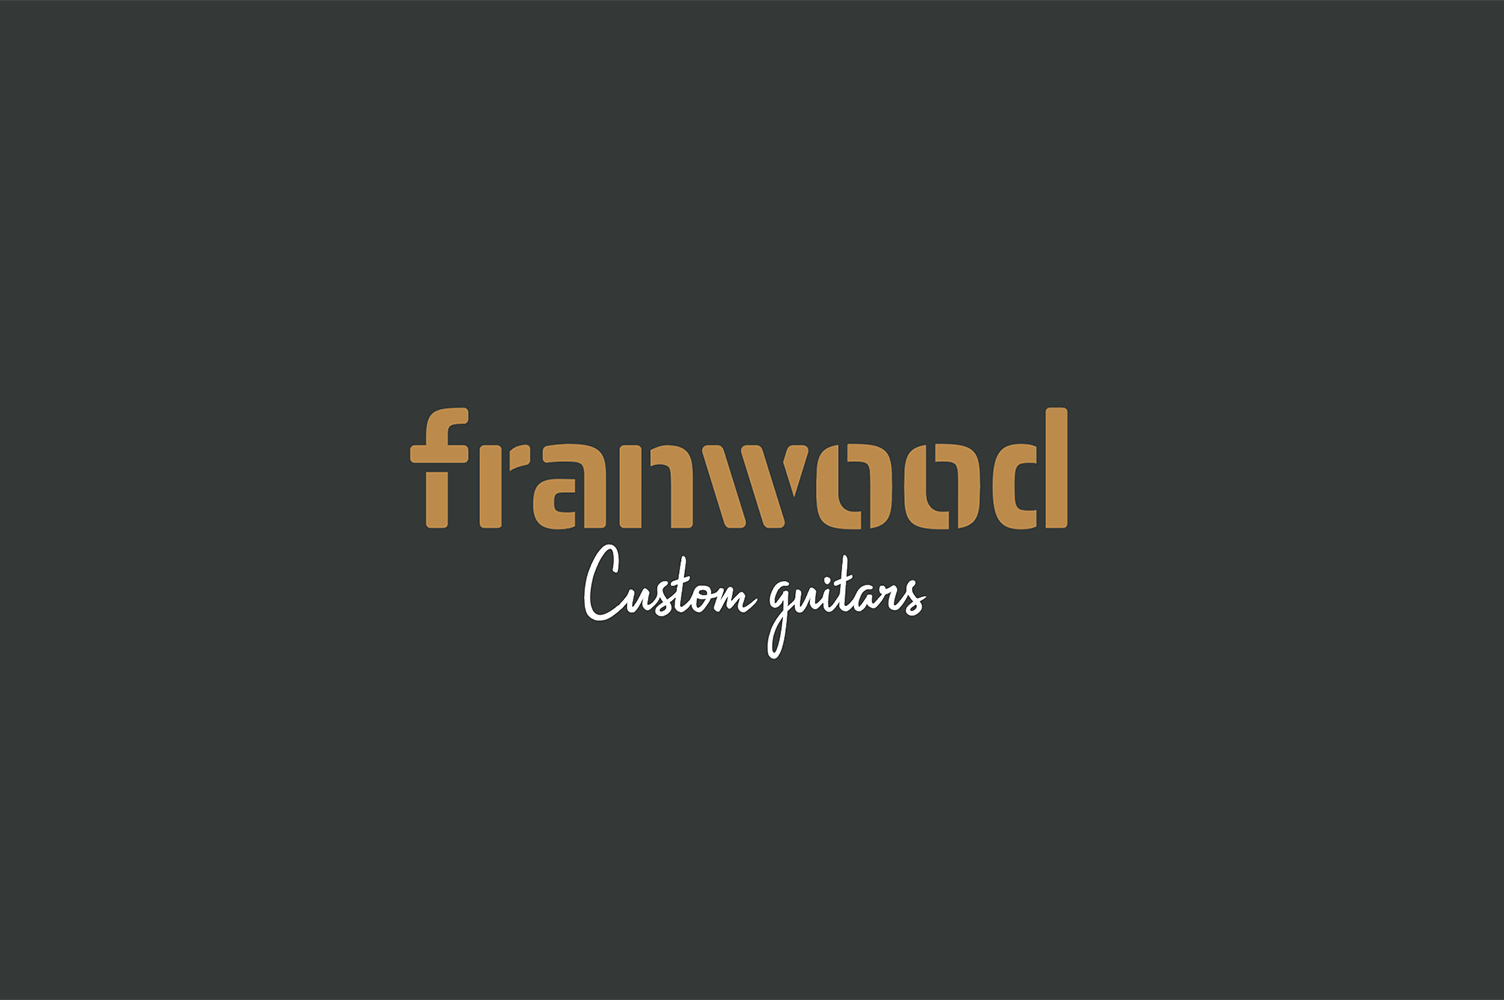 Logotipo Franwood custom guitars versión invertida